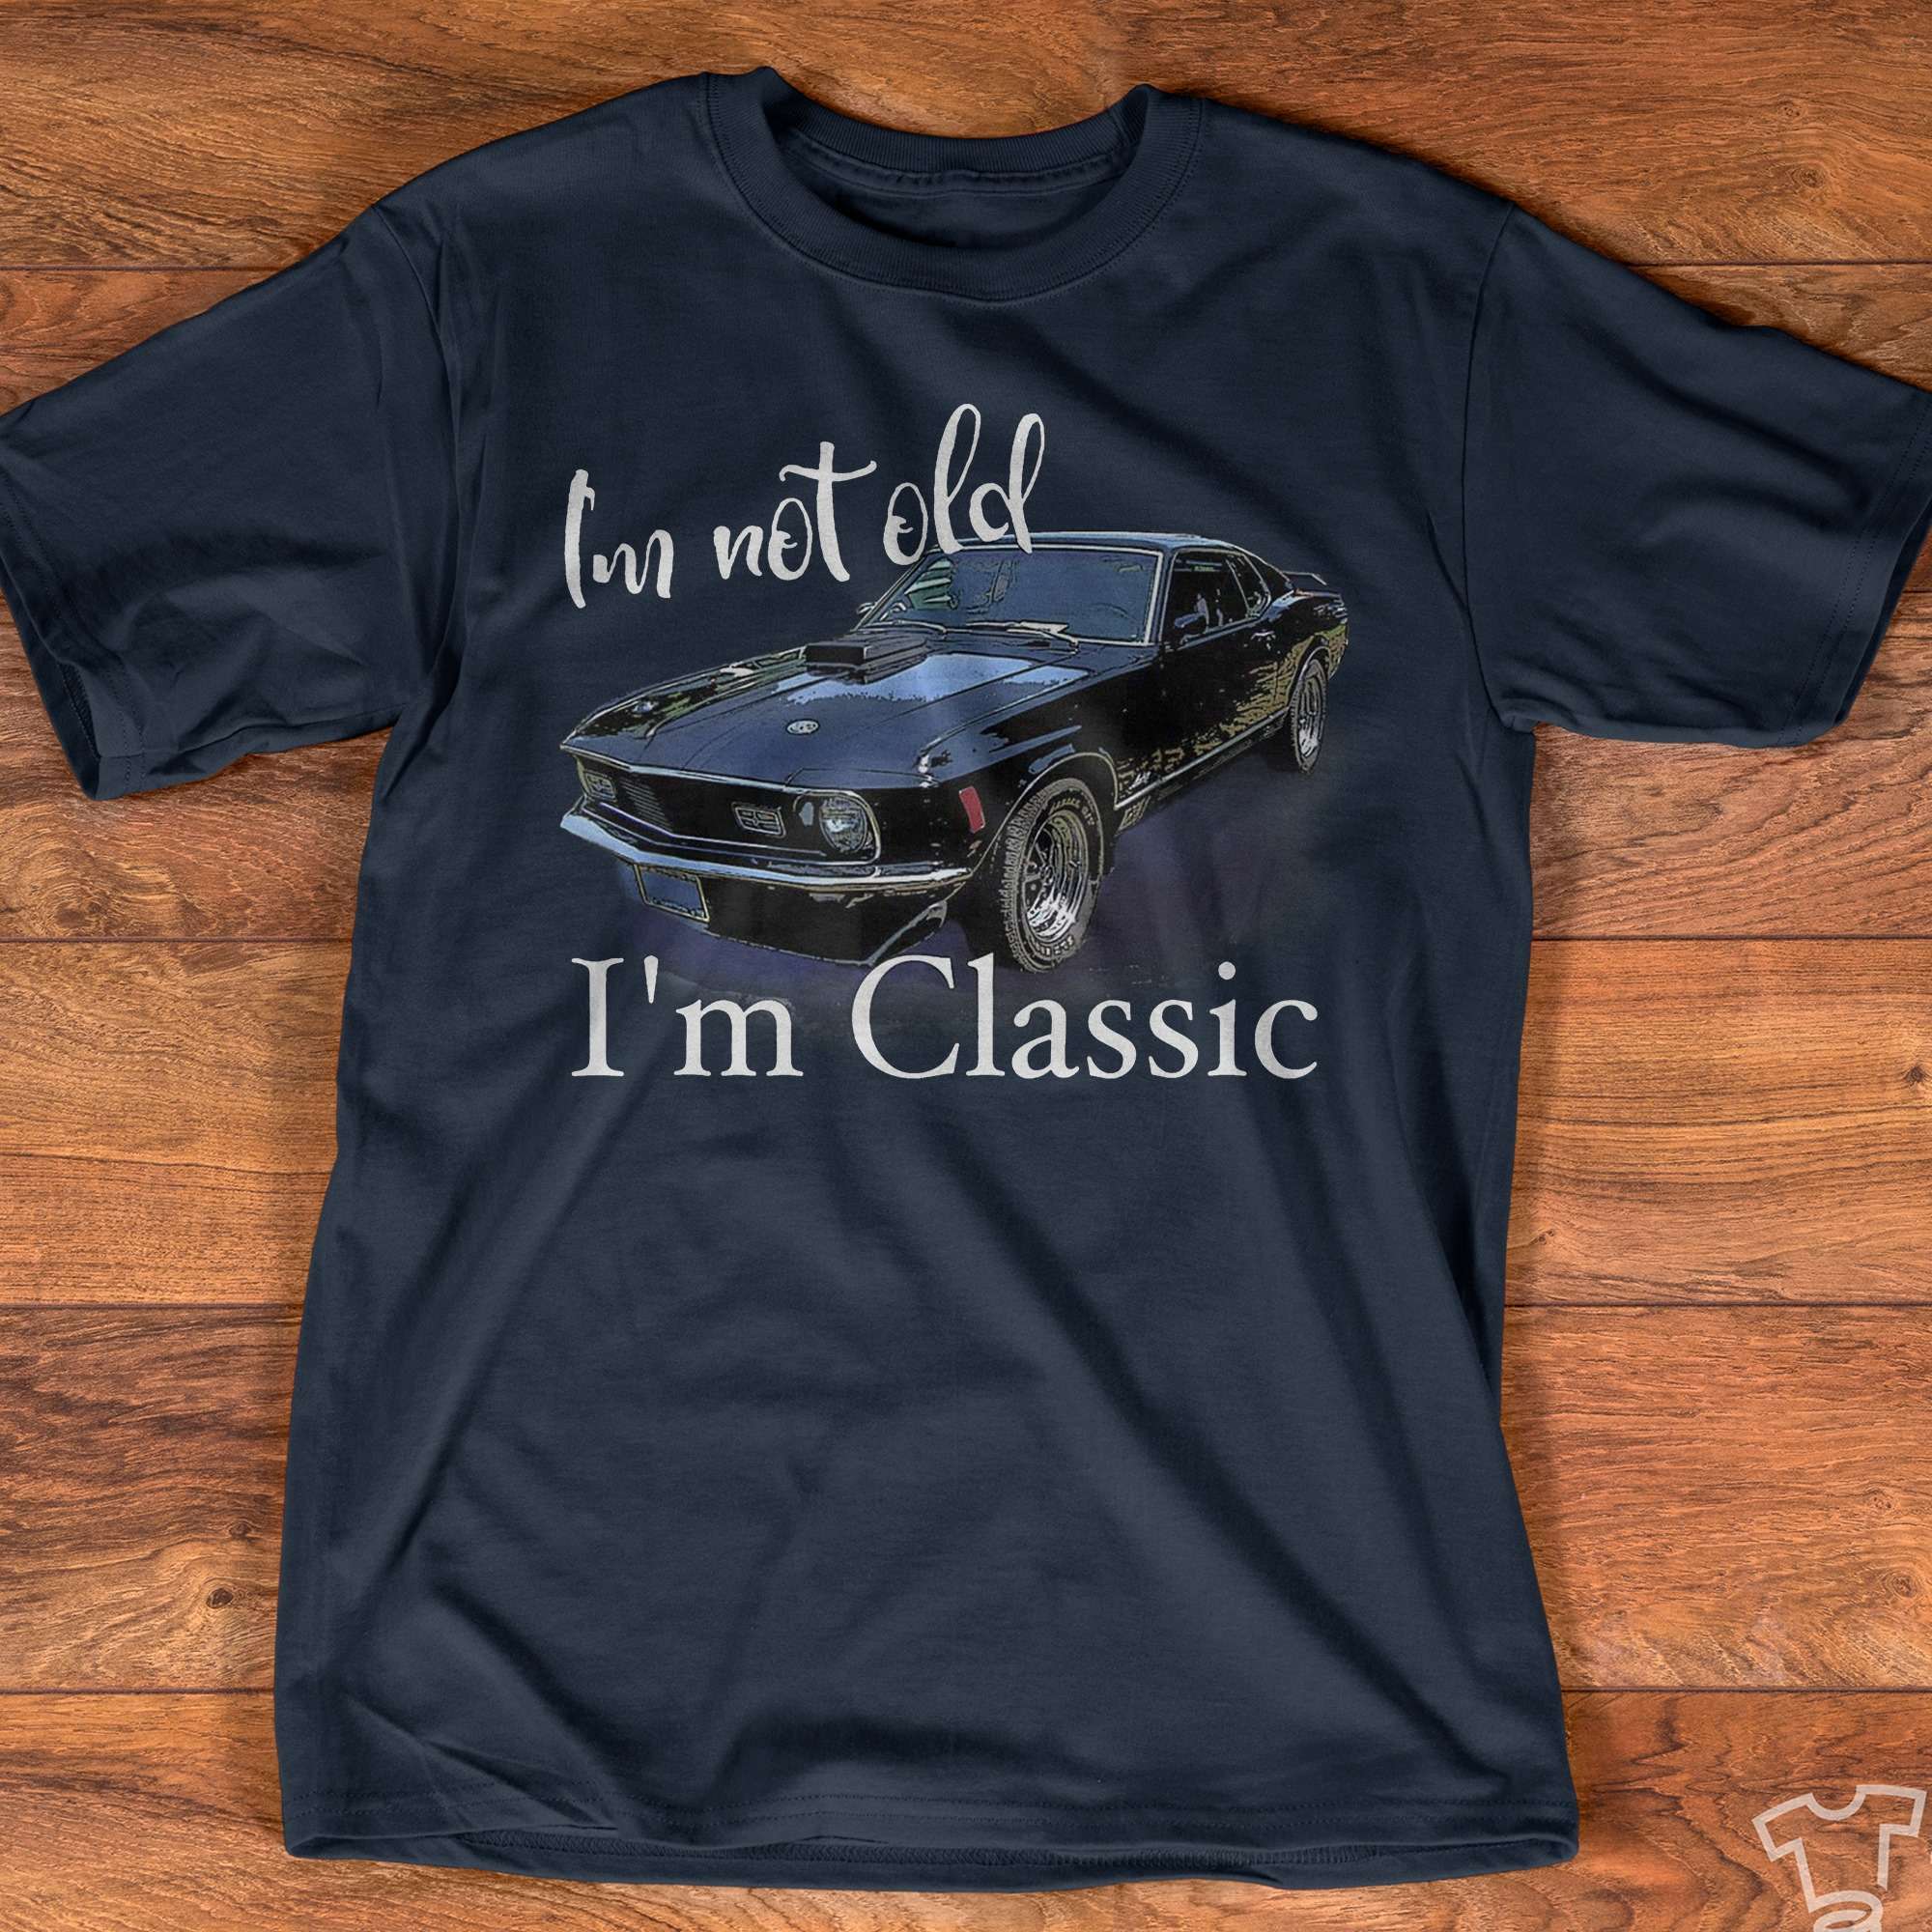 Vintage Car - I'm not old i'm classic